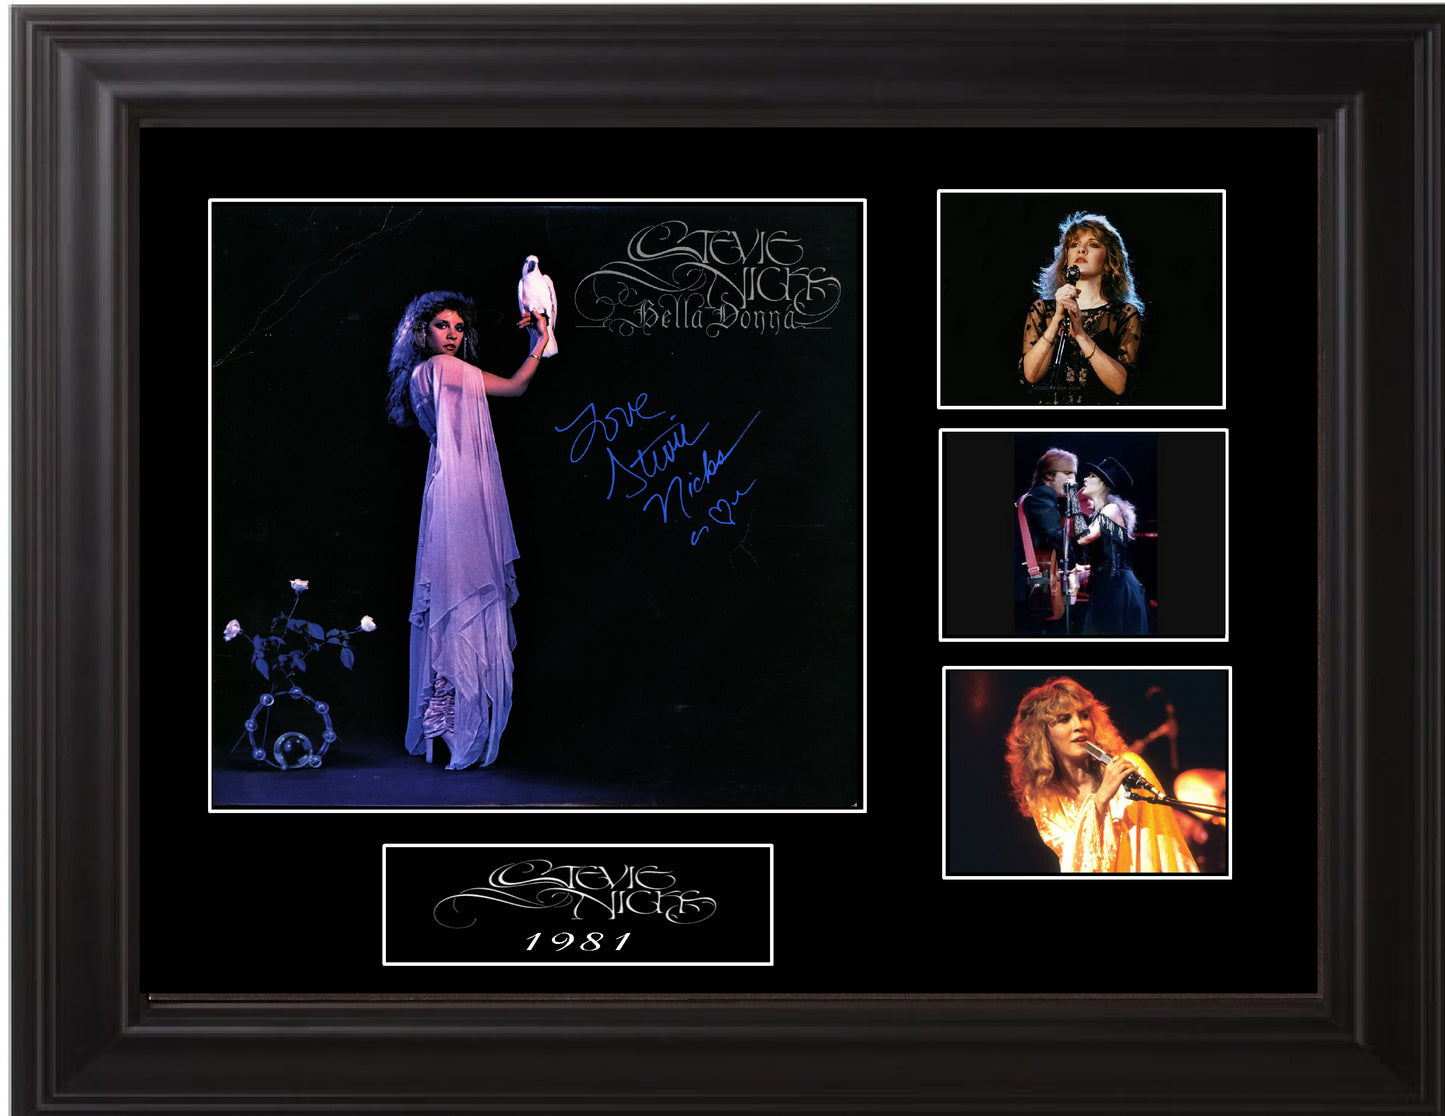 Stevie Nicks Band Signed Bella Donna Album - Zion Graphic Collectibles